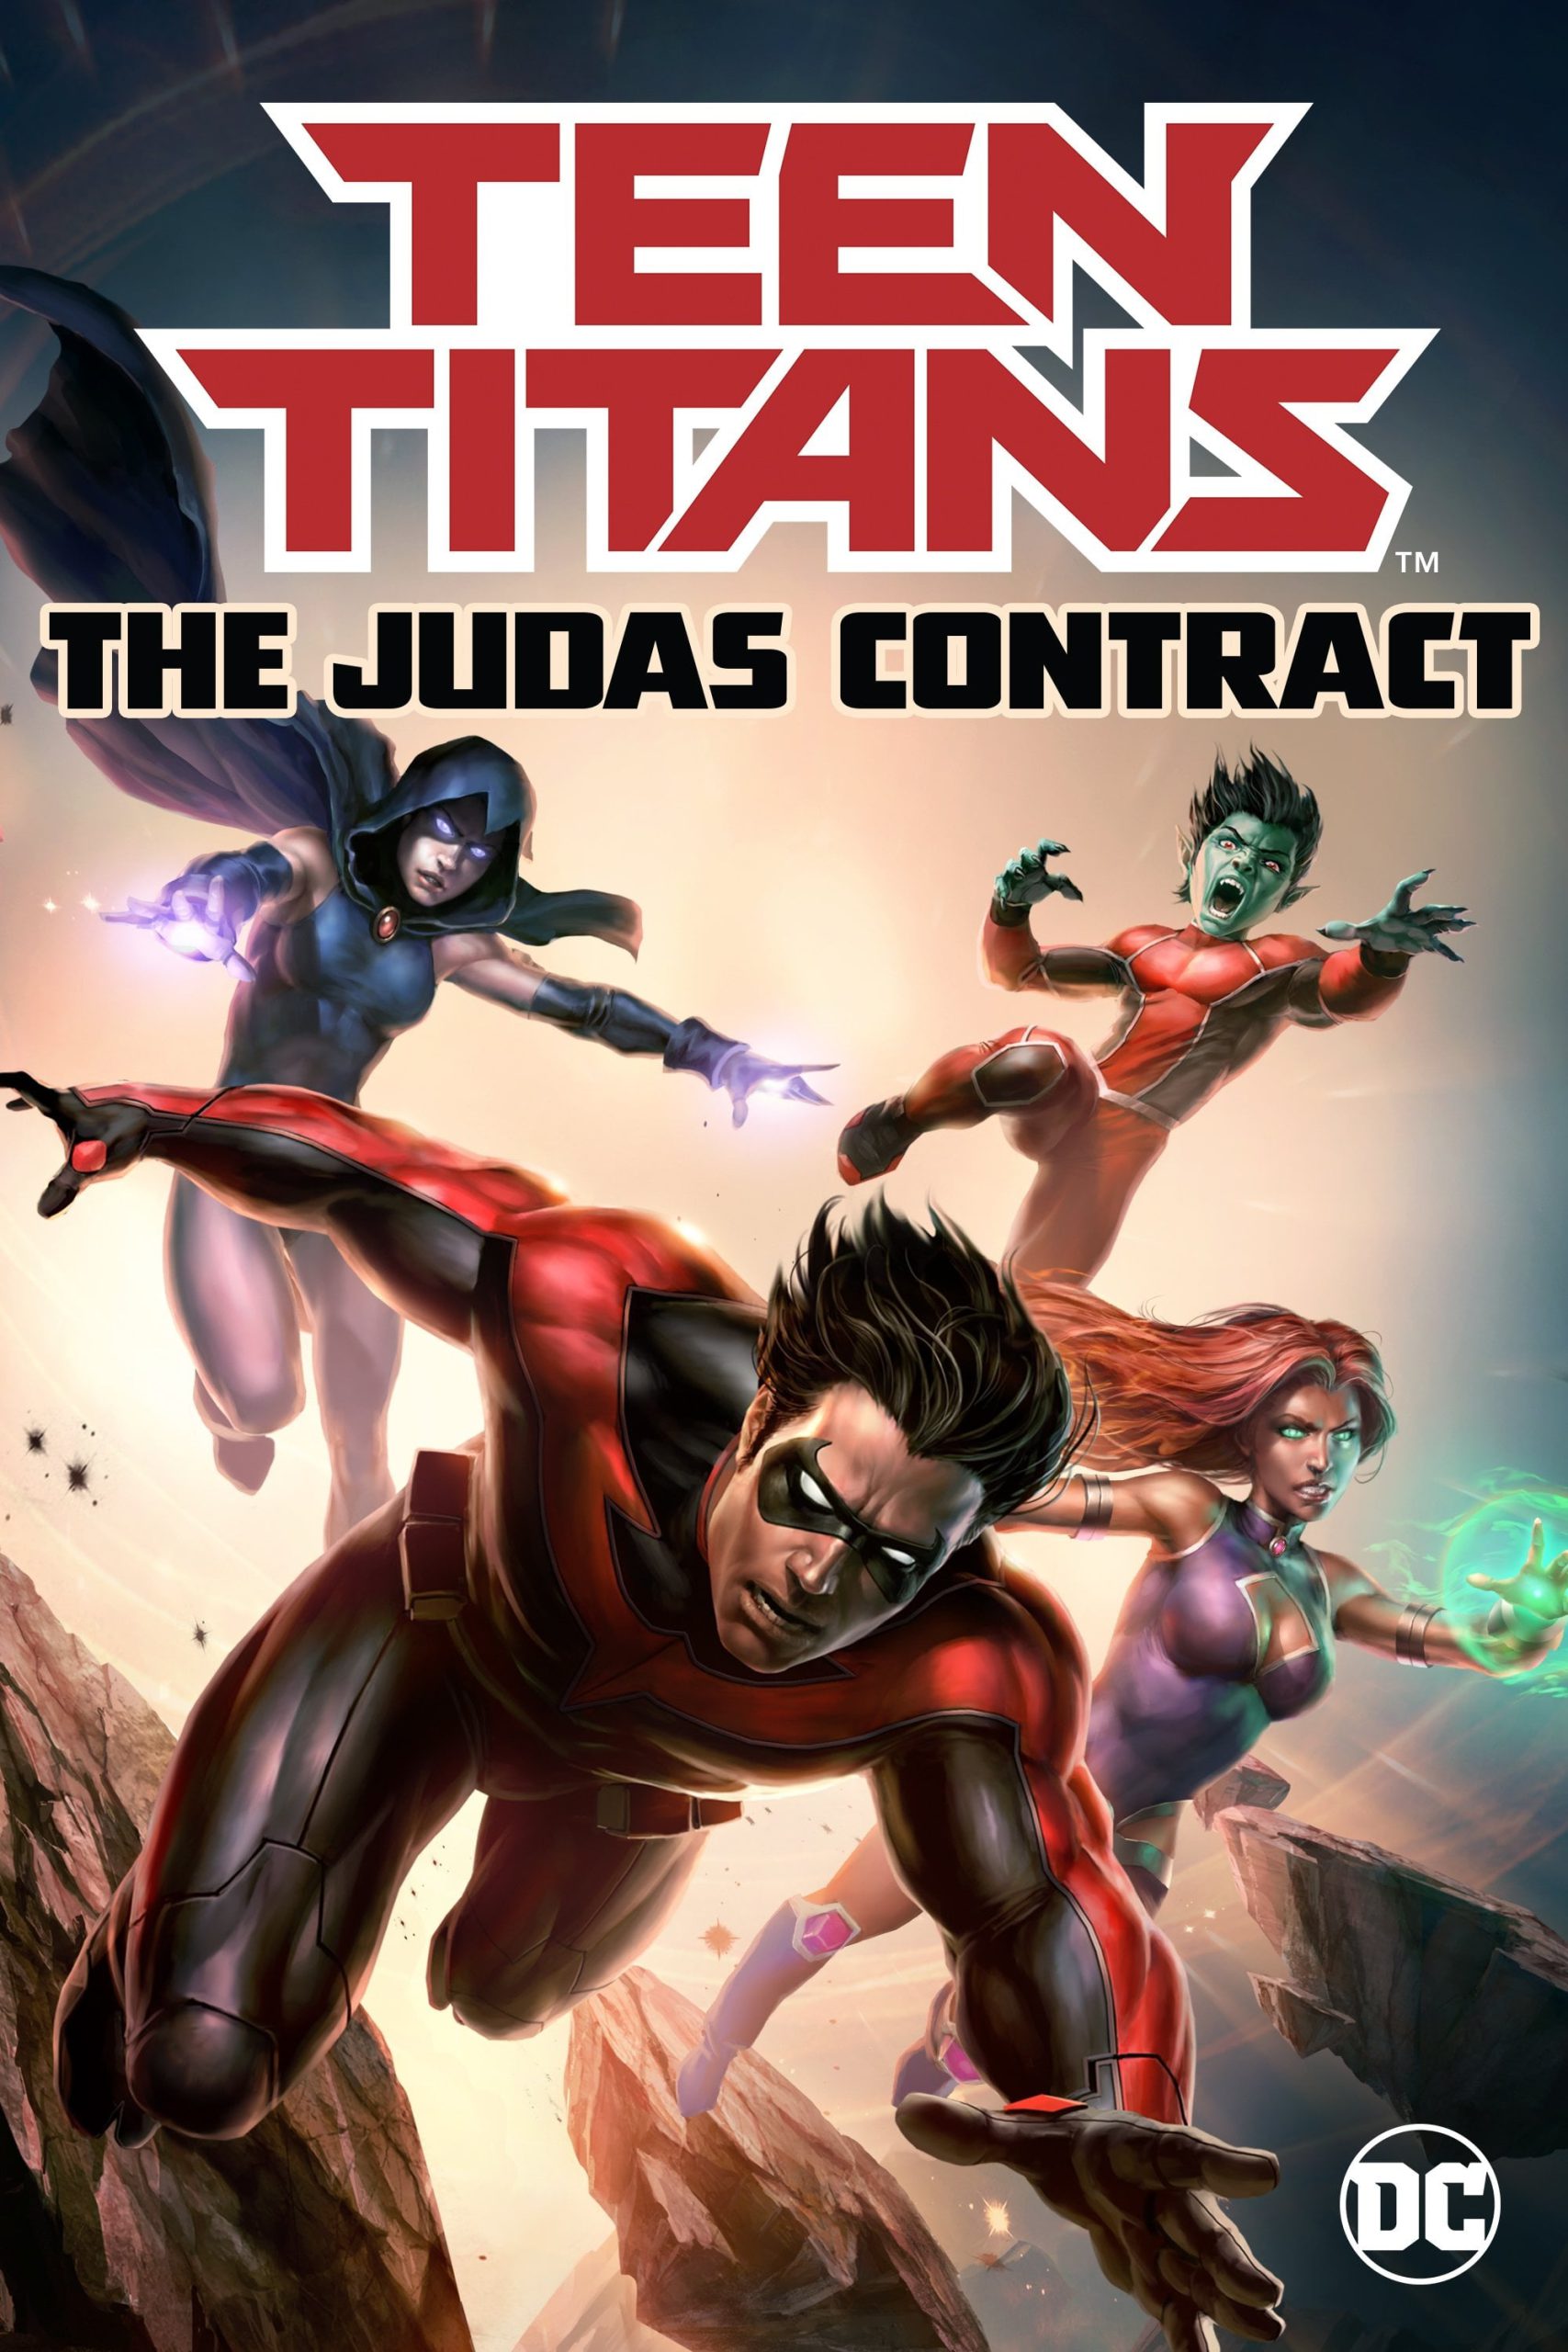 Teen Titans: The Judas Contract [Sub-ITA] (2017)